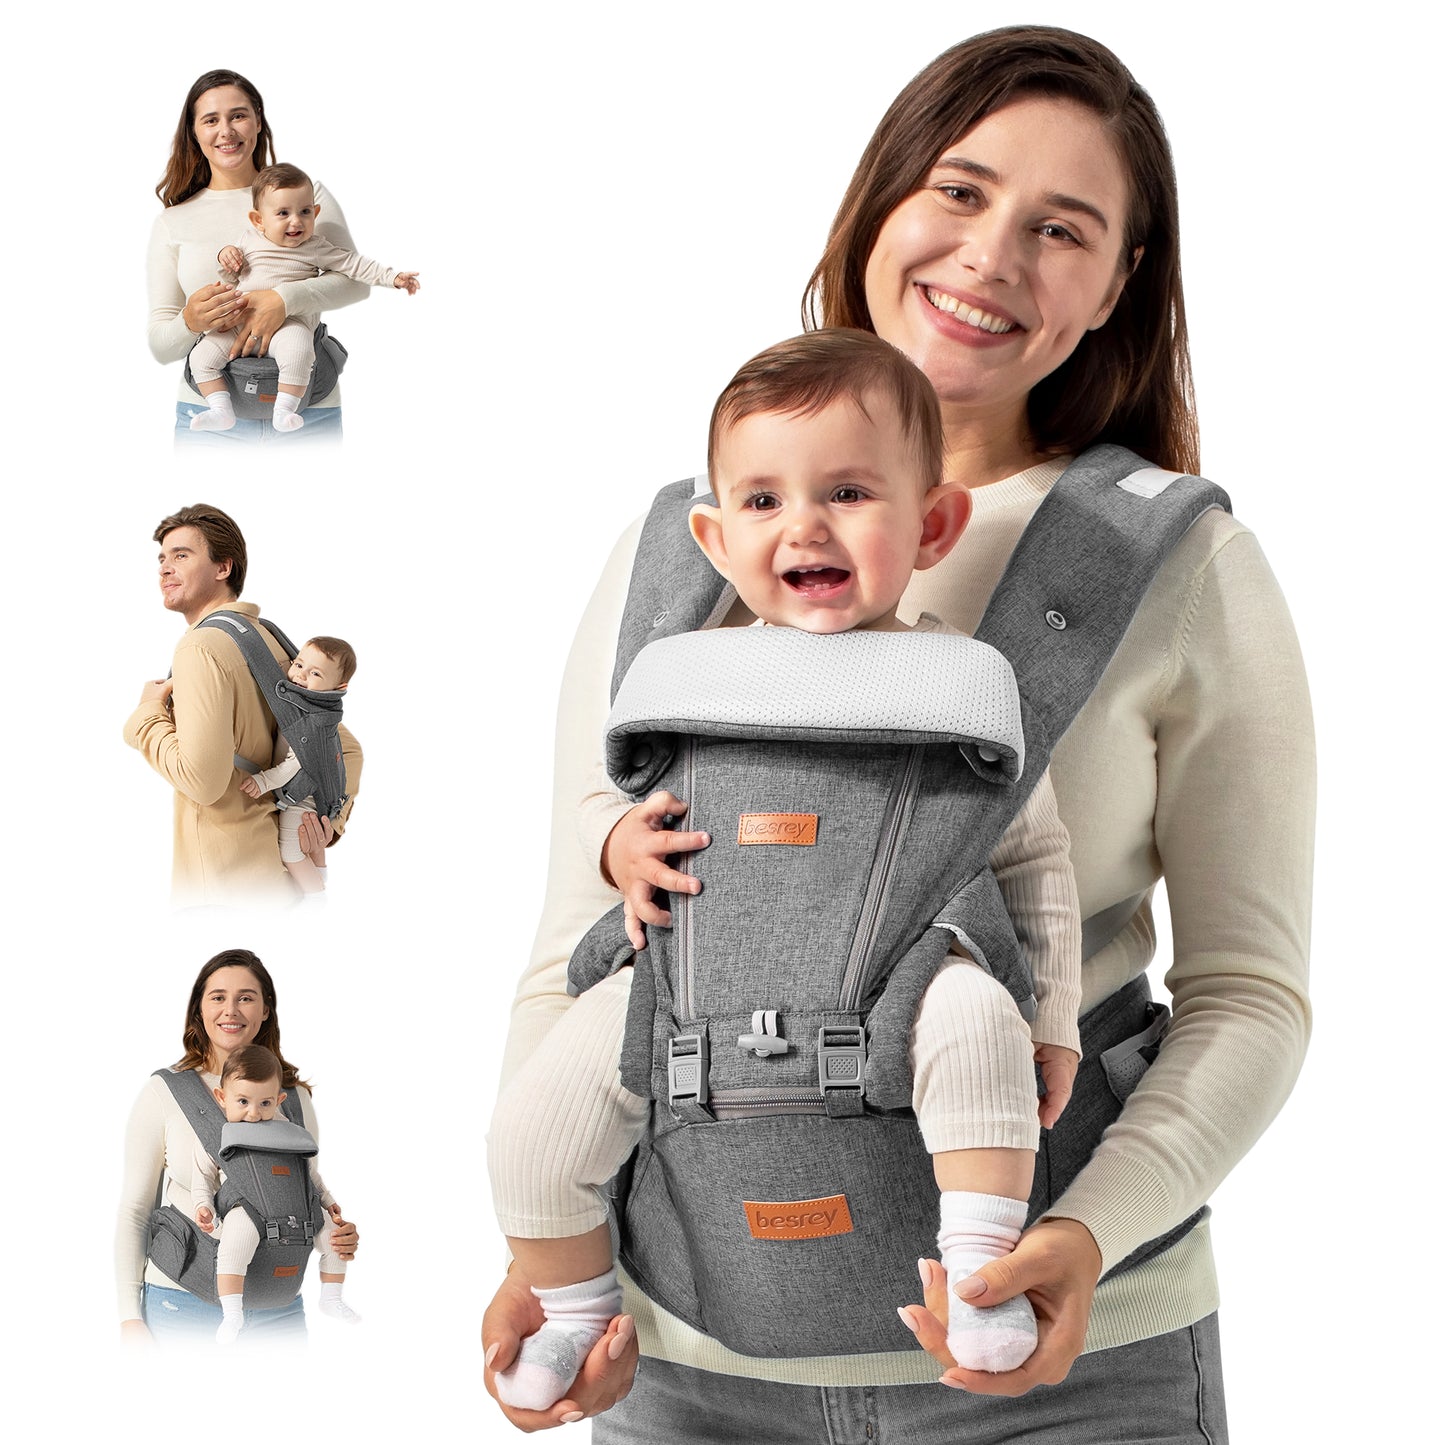 besrey Hip Carrier for Baby, Infant Carrier Plus Size Mom, Men Baby Carrier Backpack